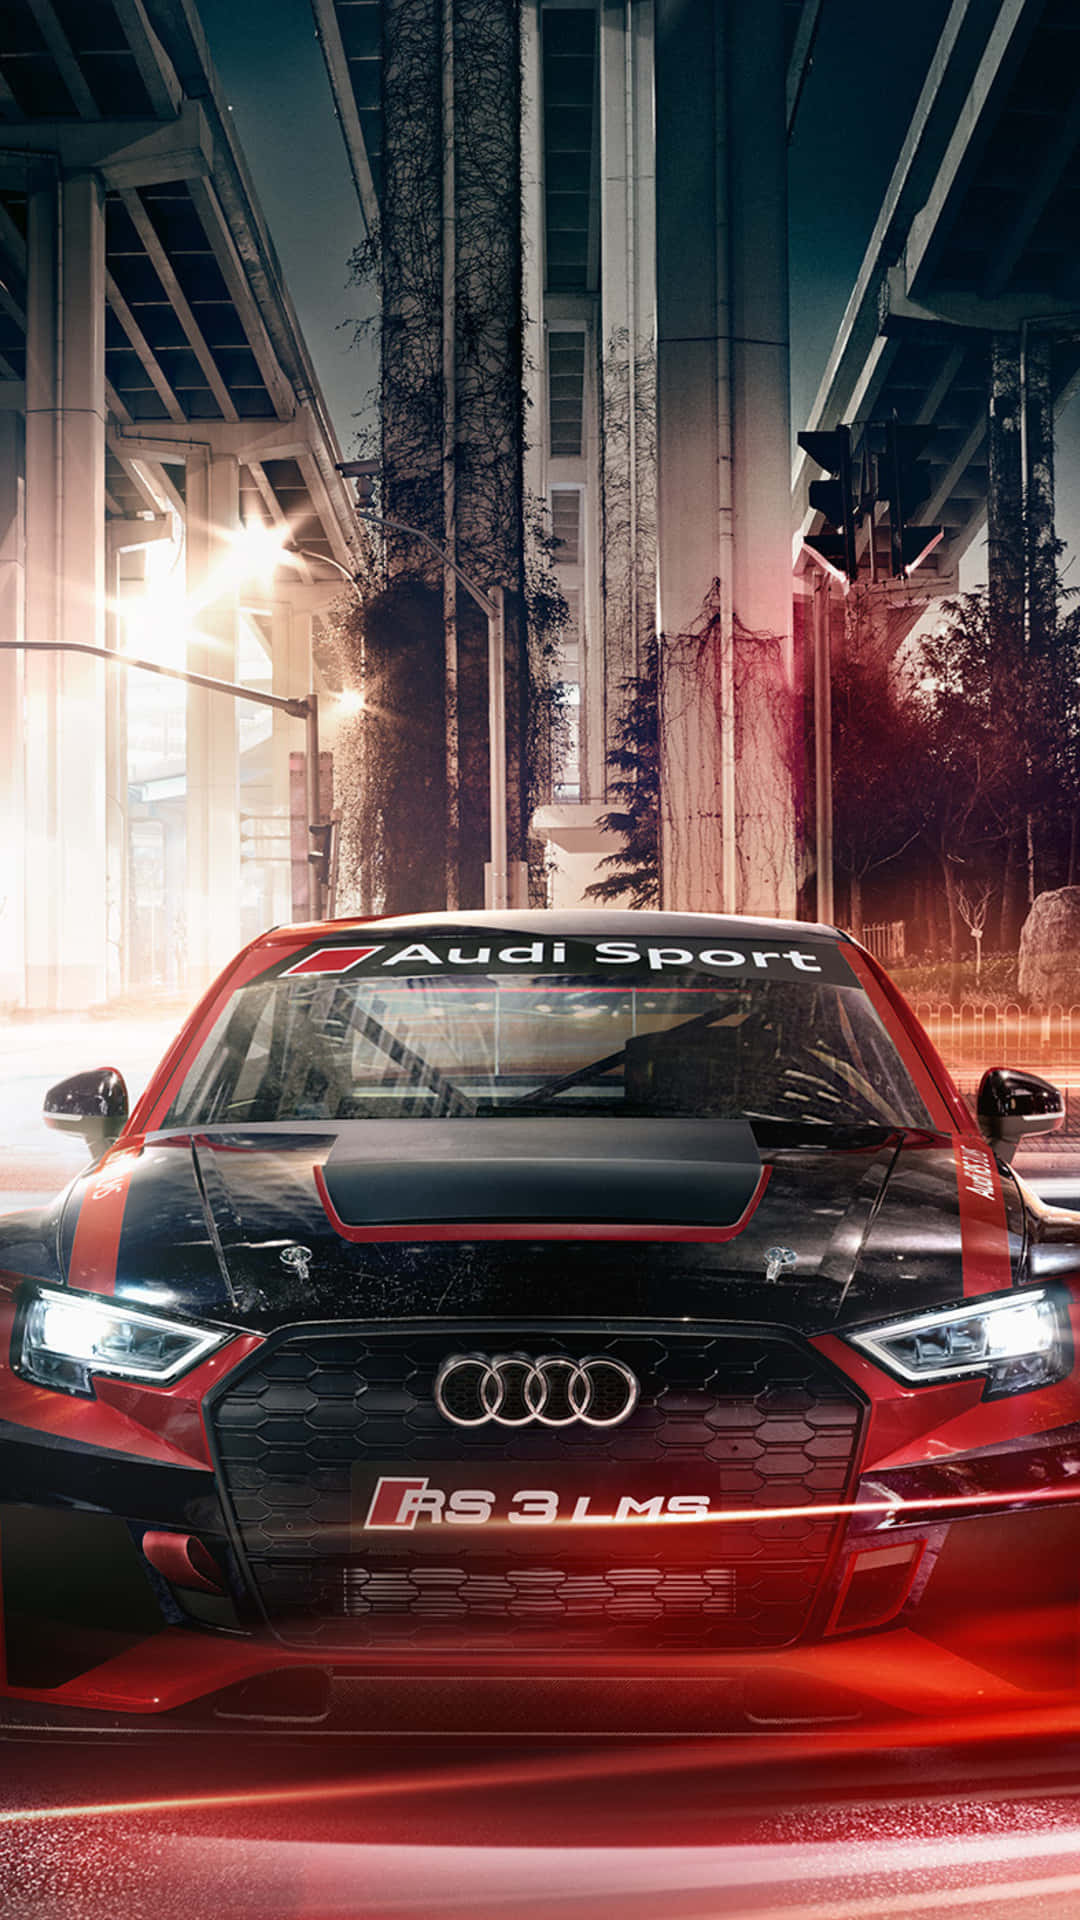 The Audi of the Future Wallpaper